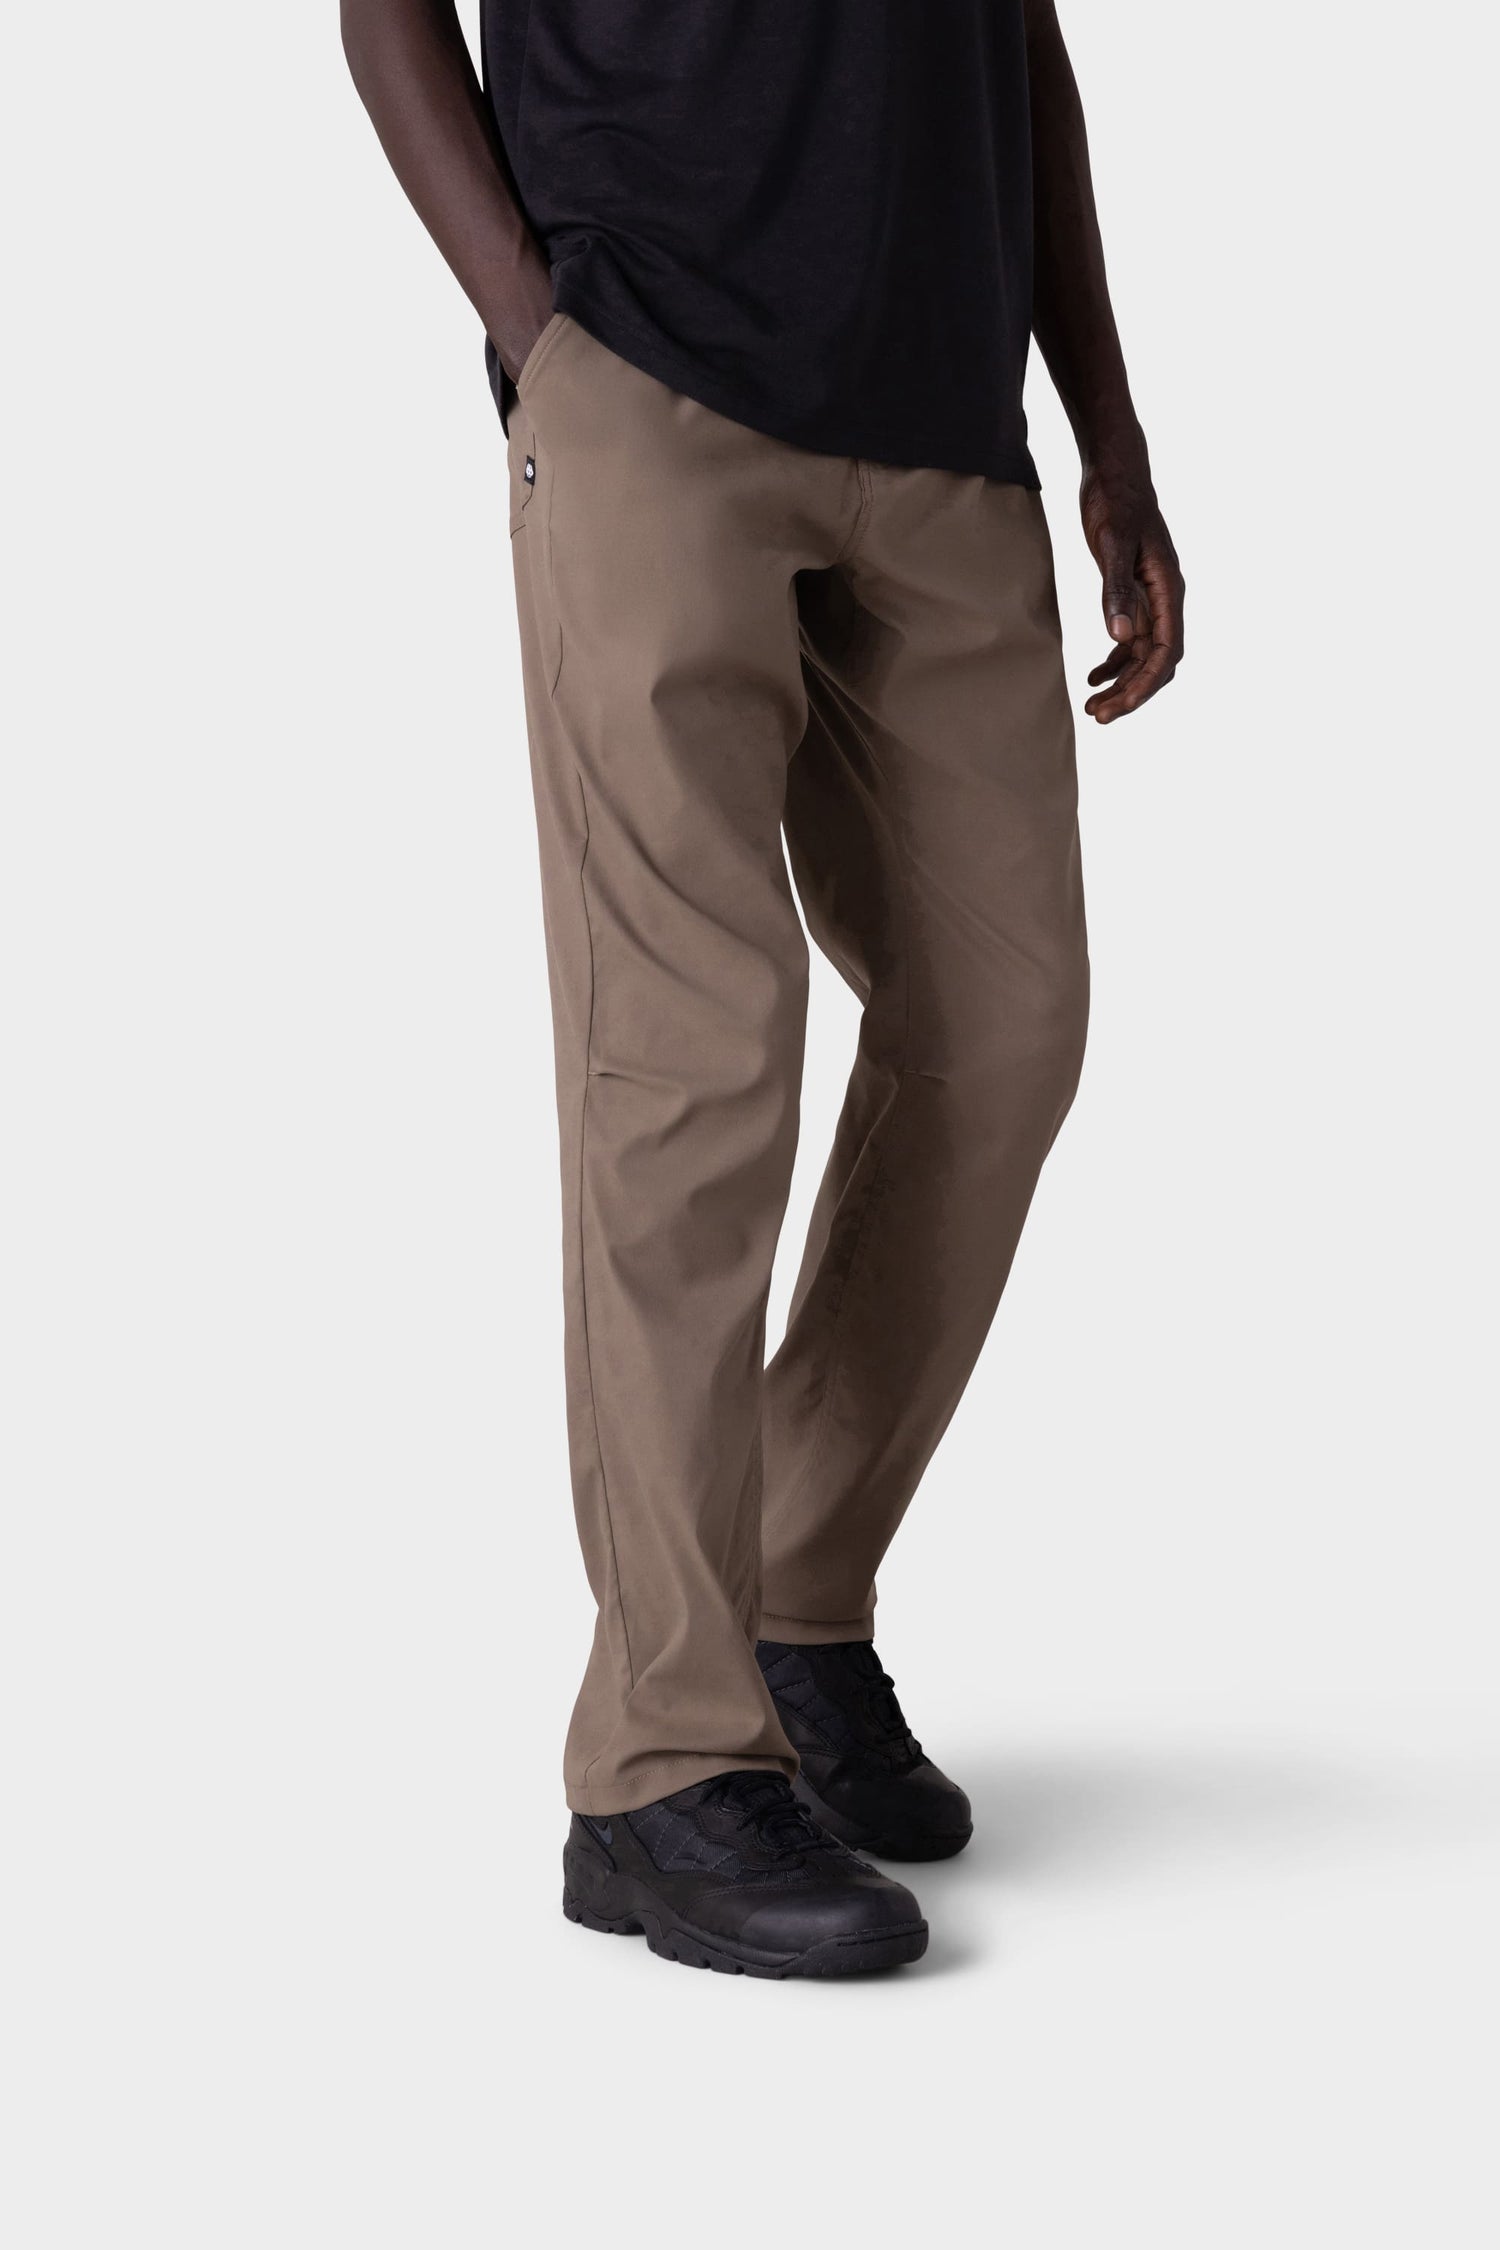 Buy Sunnydaysweety New men's ankle casual pants CA101403BK 2024